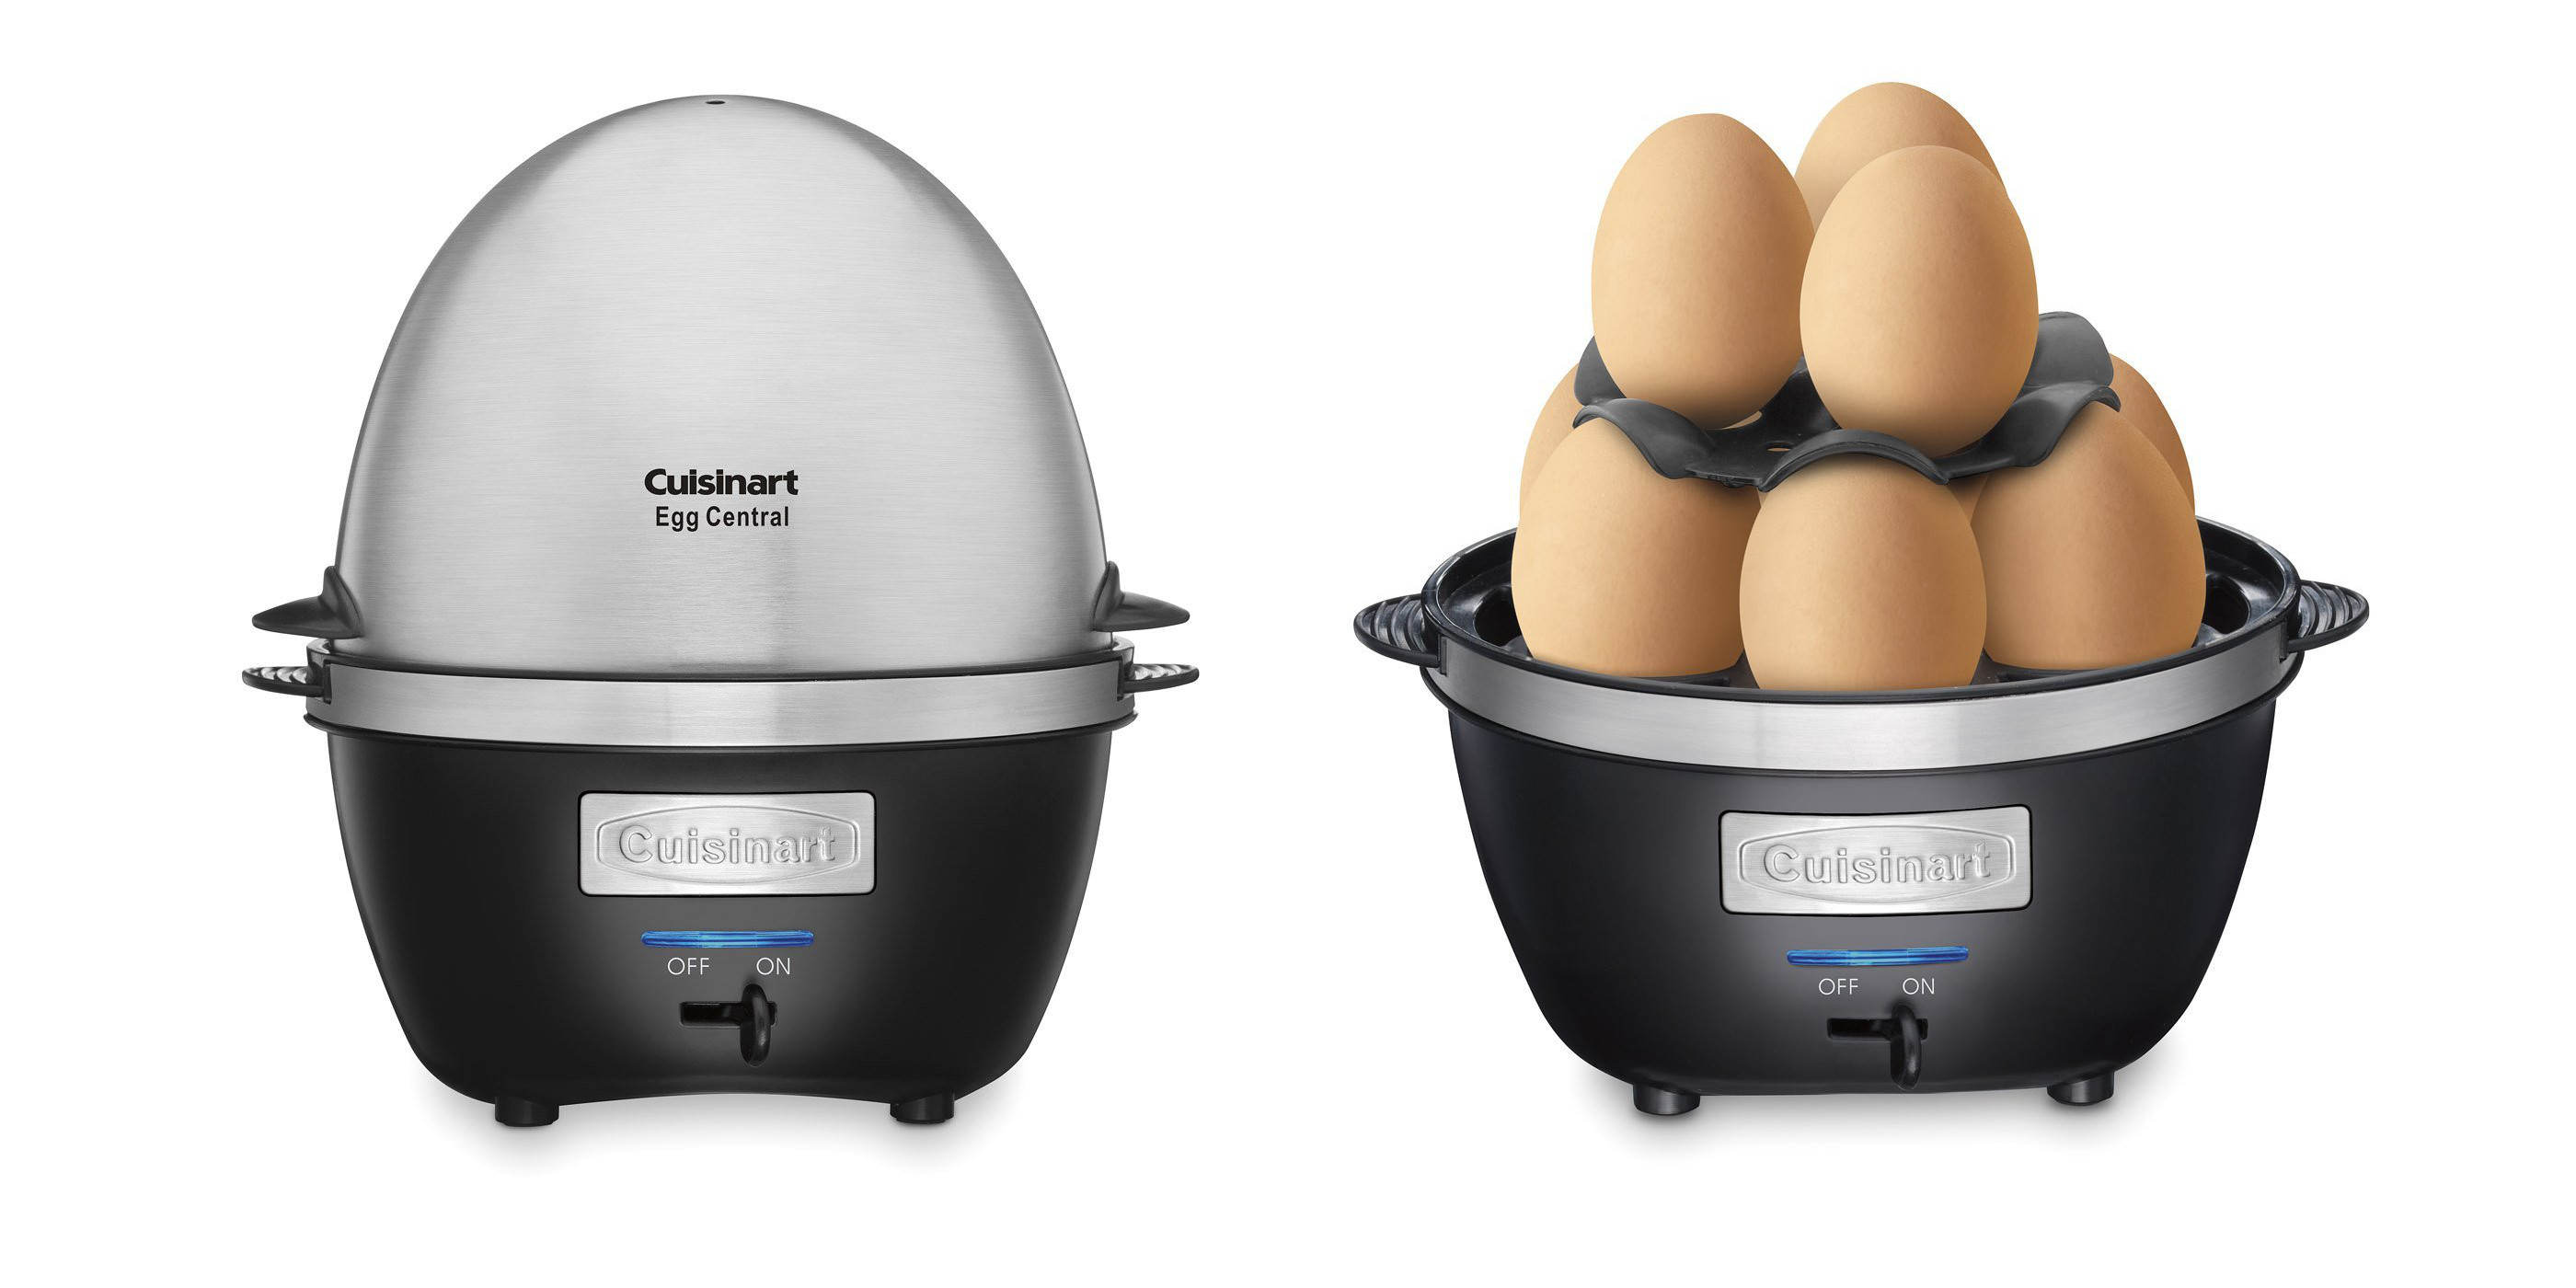 https://9to5toys.com/wp-content/uploads/sites/5/2018/04/cuisinart-cec-10-egg-central-egg-cooker-2.jpg